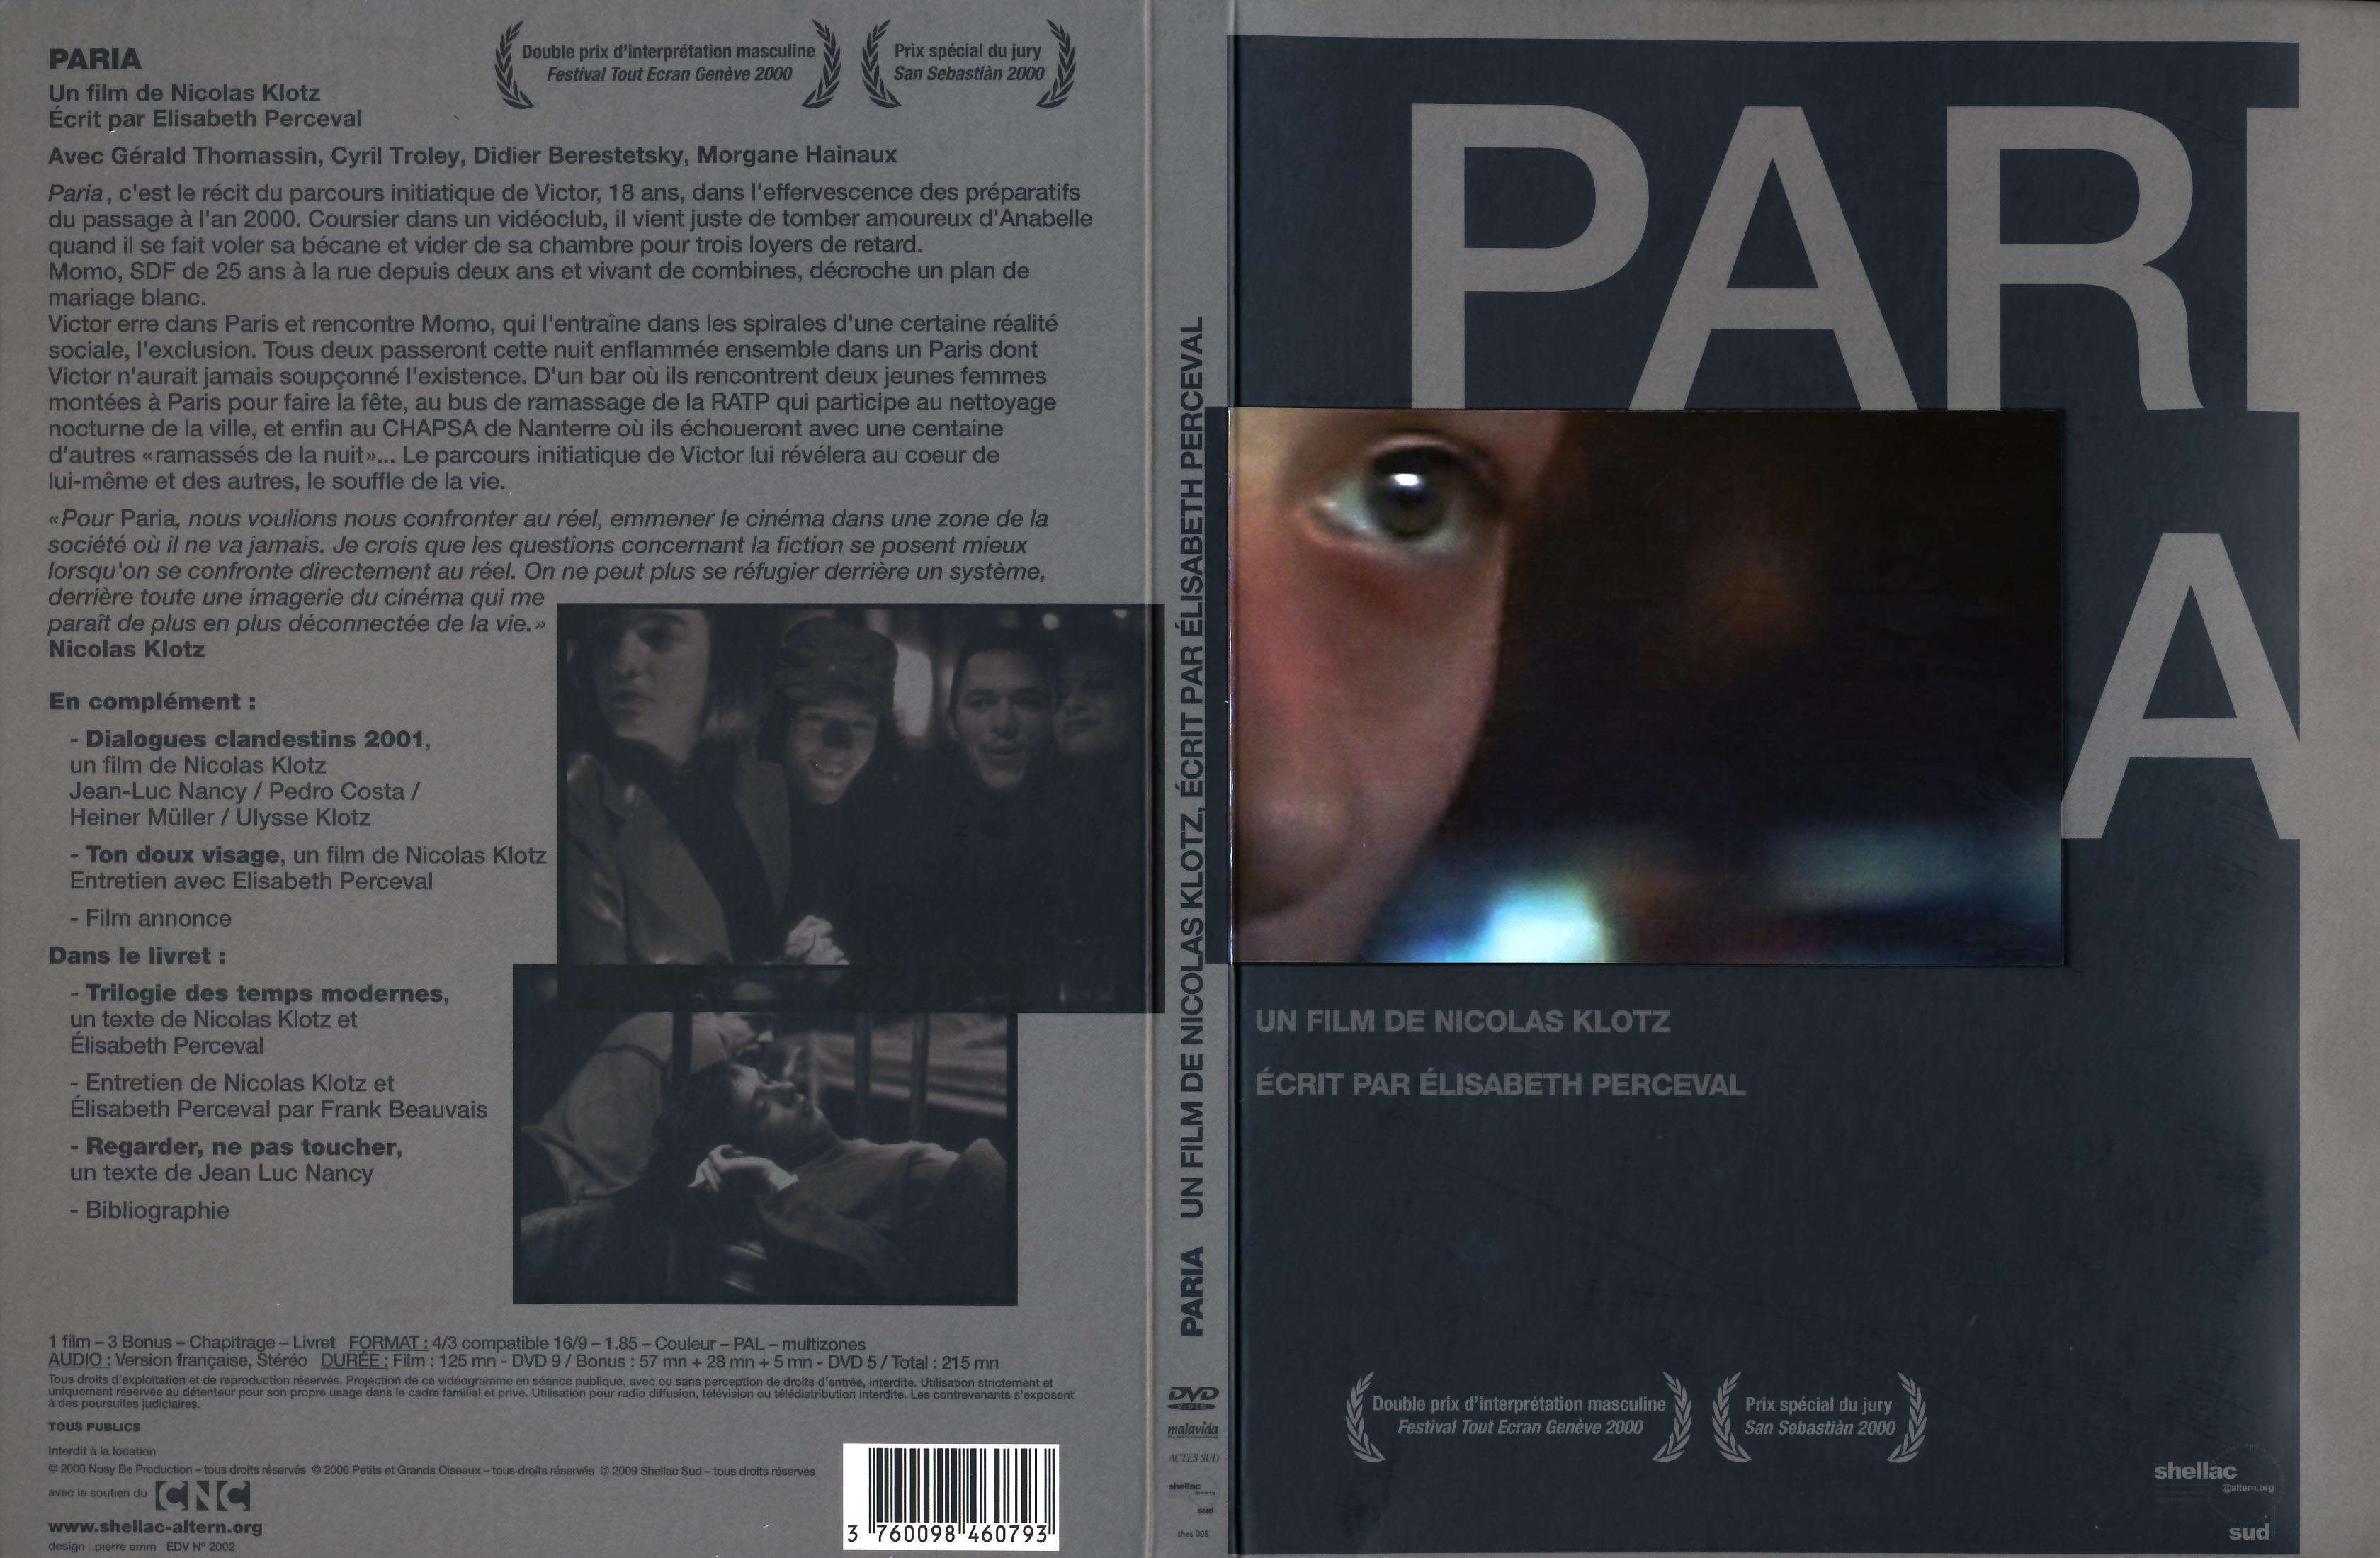 Jaquette DVD Paria